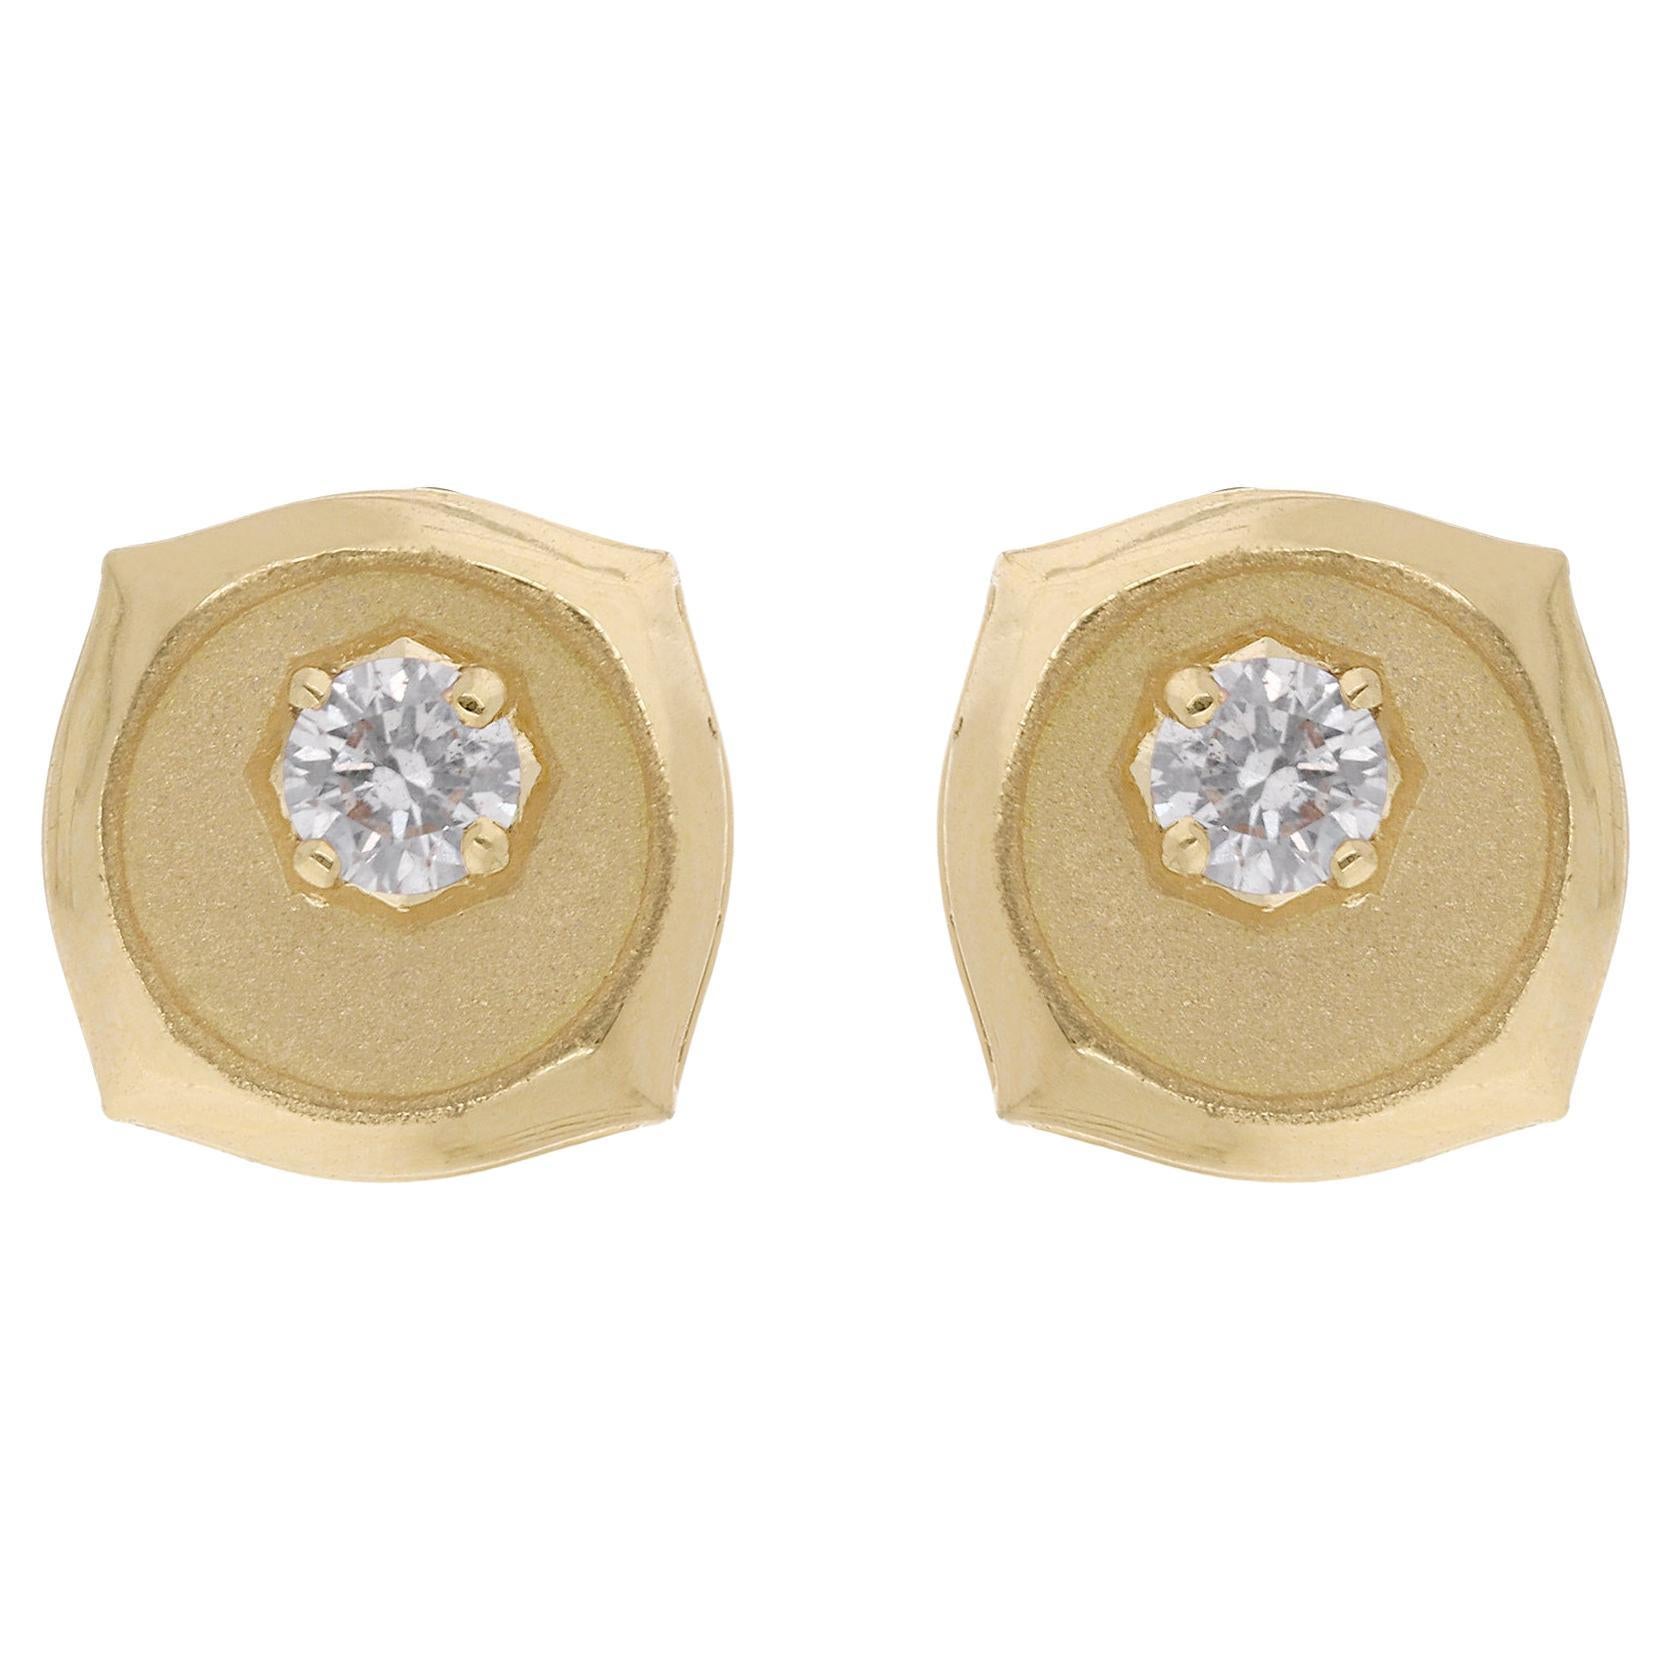 0.20 Carat Round Diamond Stud Earrings 18 Karat Yellow Gold Handmade Jewelry